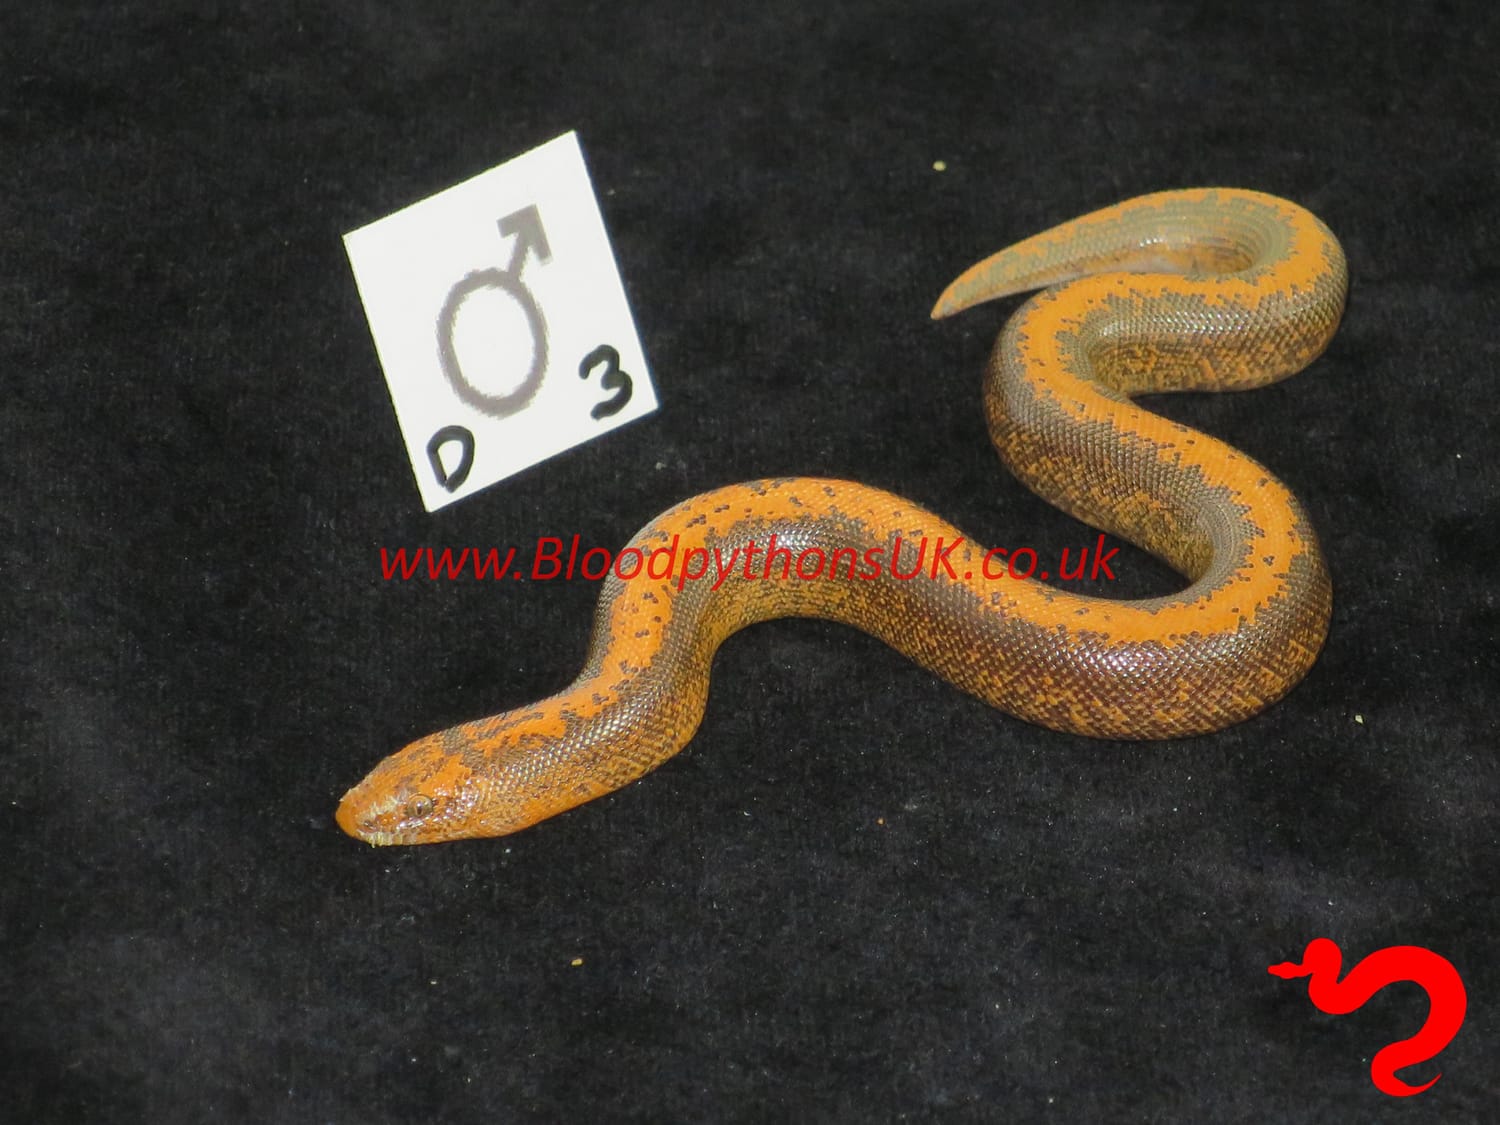 Striped 93.75% Orange Dodoma Sand Boa by Blood Pythons UK